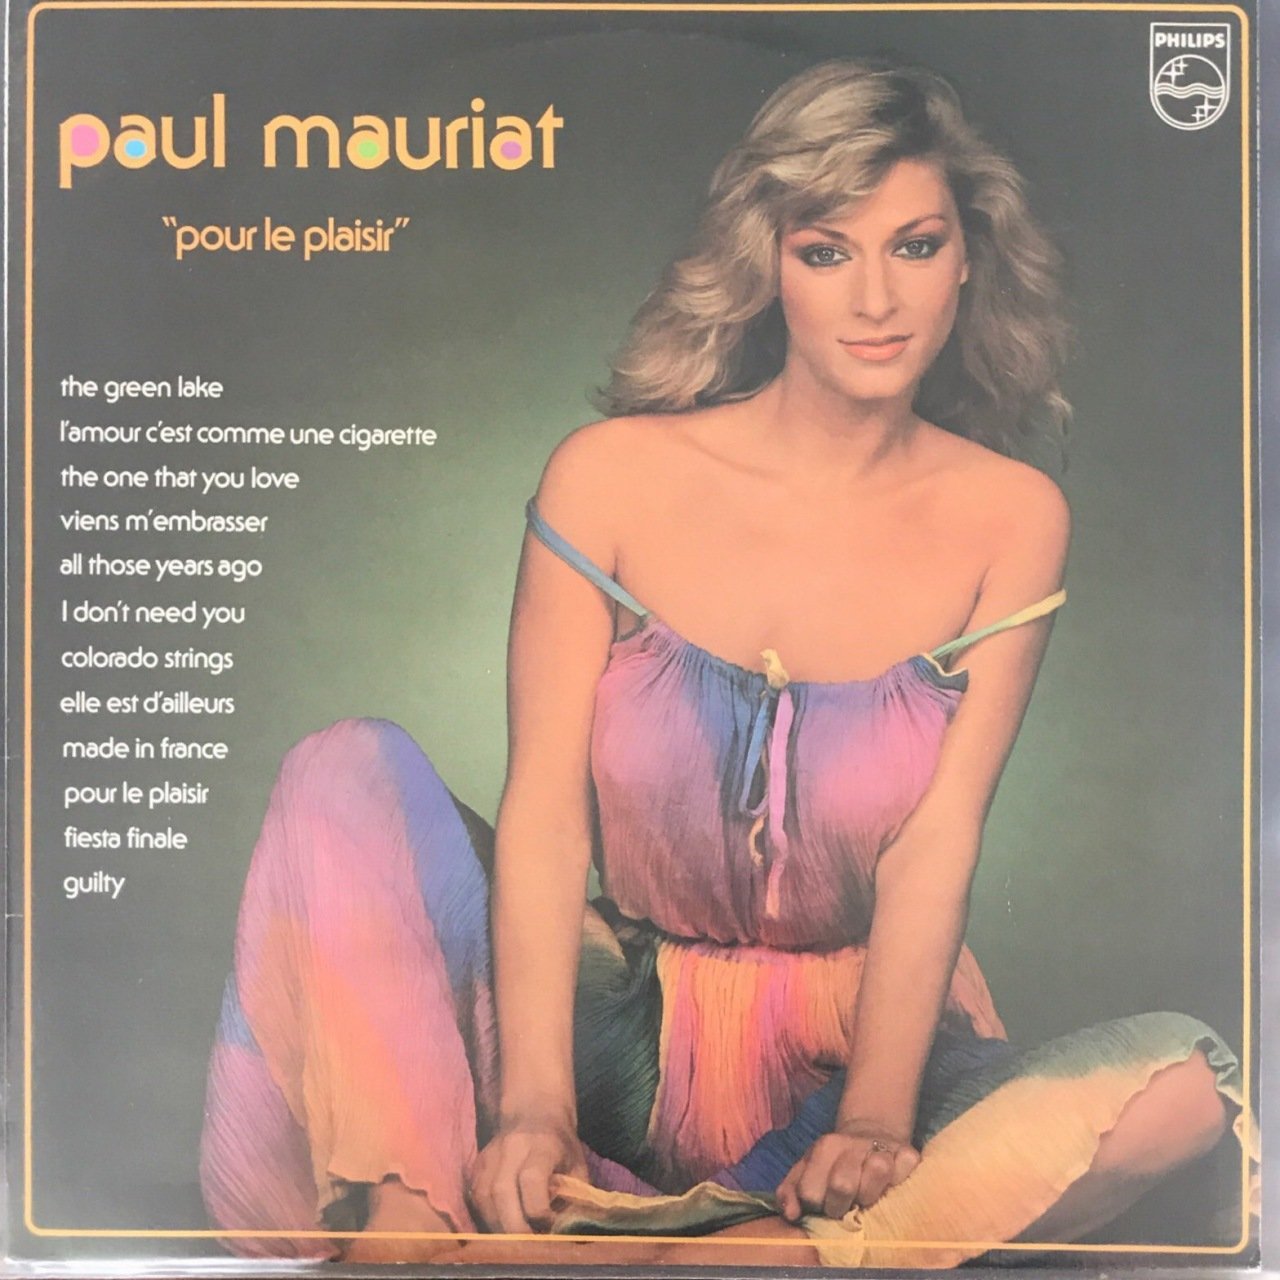 Www paul com. Paul Mauriat. Paul Mauriat обложка. Поль Мориа альбомы. Paul Mauriat альбомы.